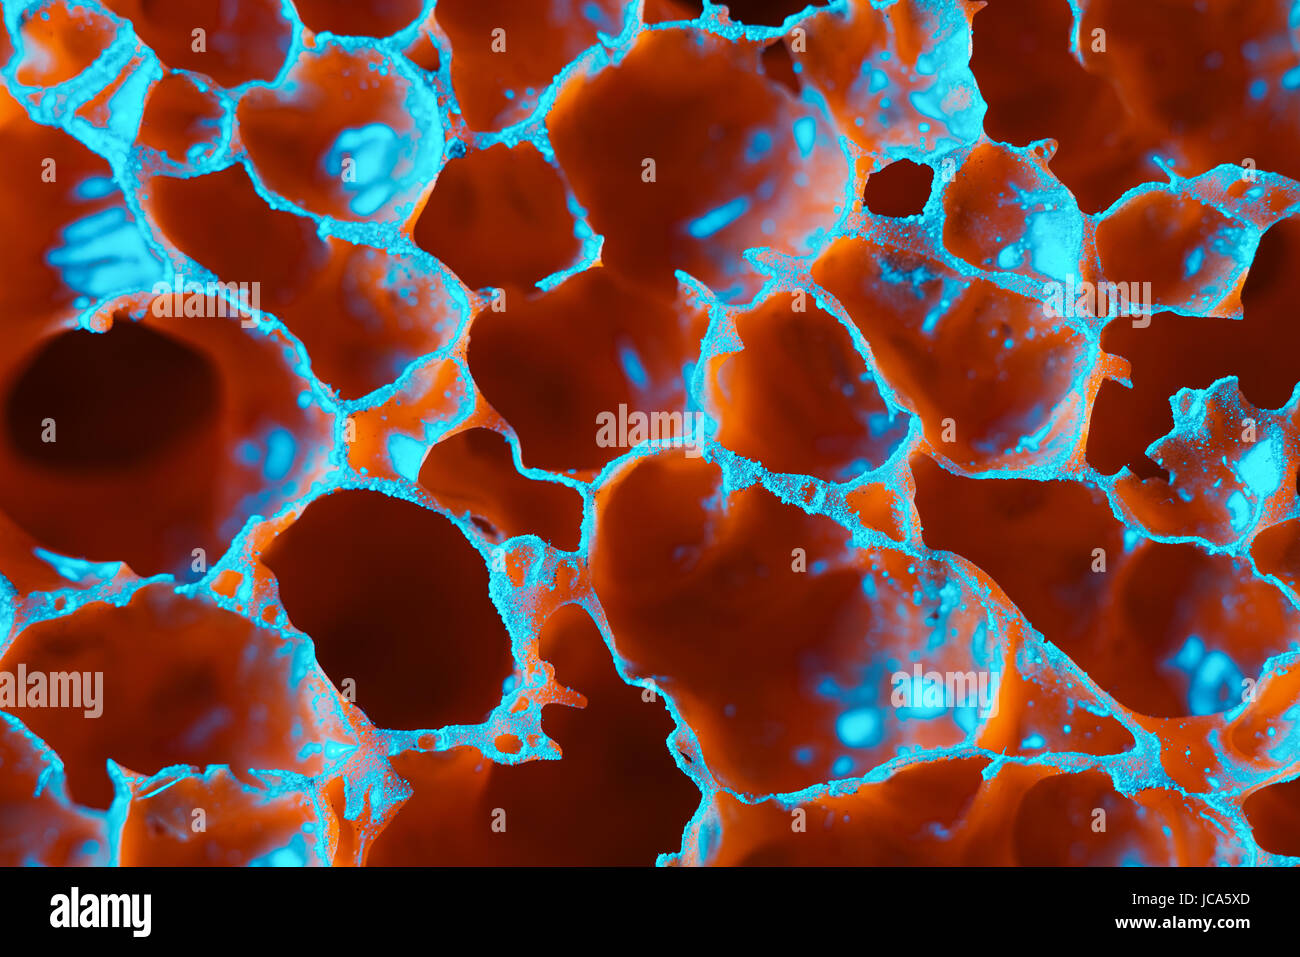 Kautschuk rot Schwamm Oberfläche super Nahaufnahme. Vergrößerung ca. 100 Mal. Stockfoto